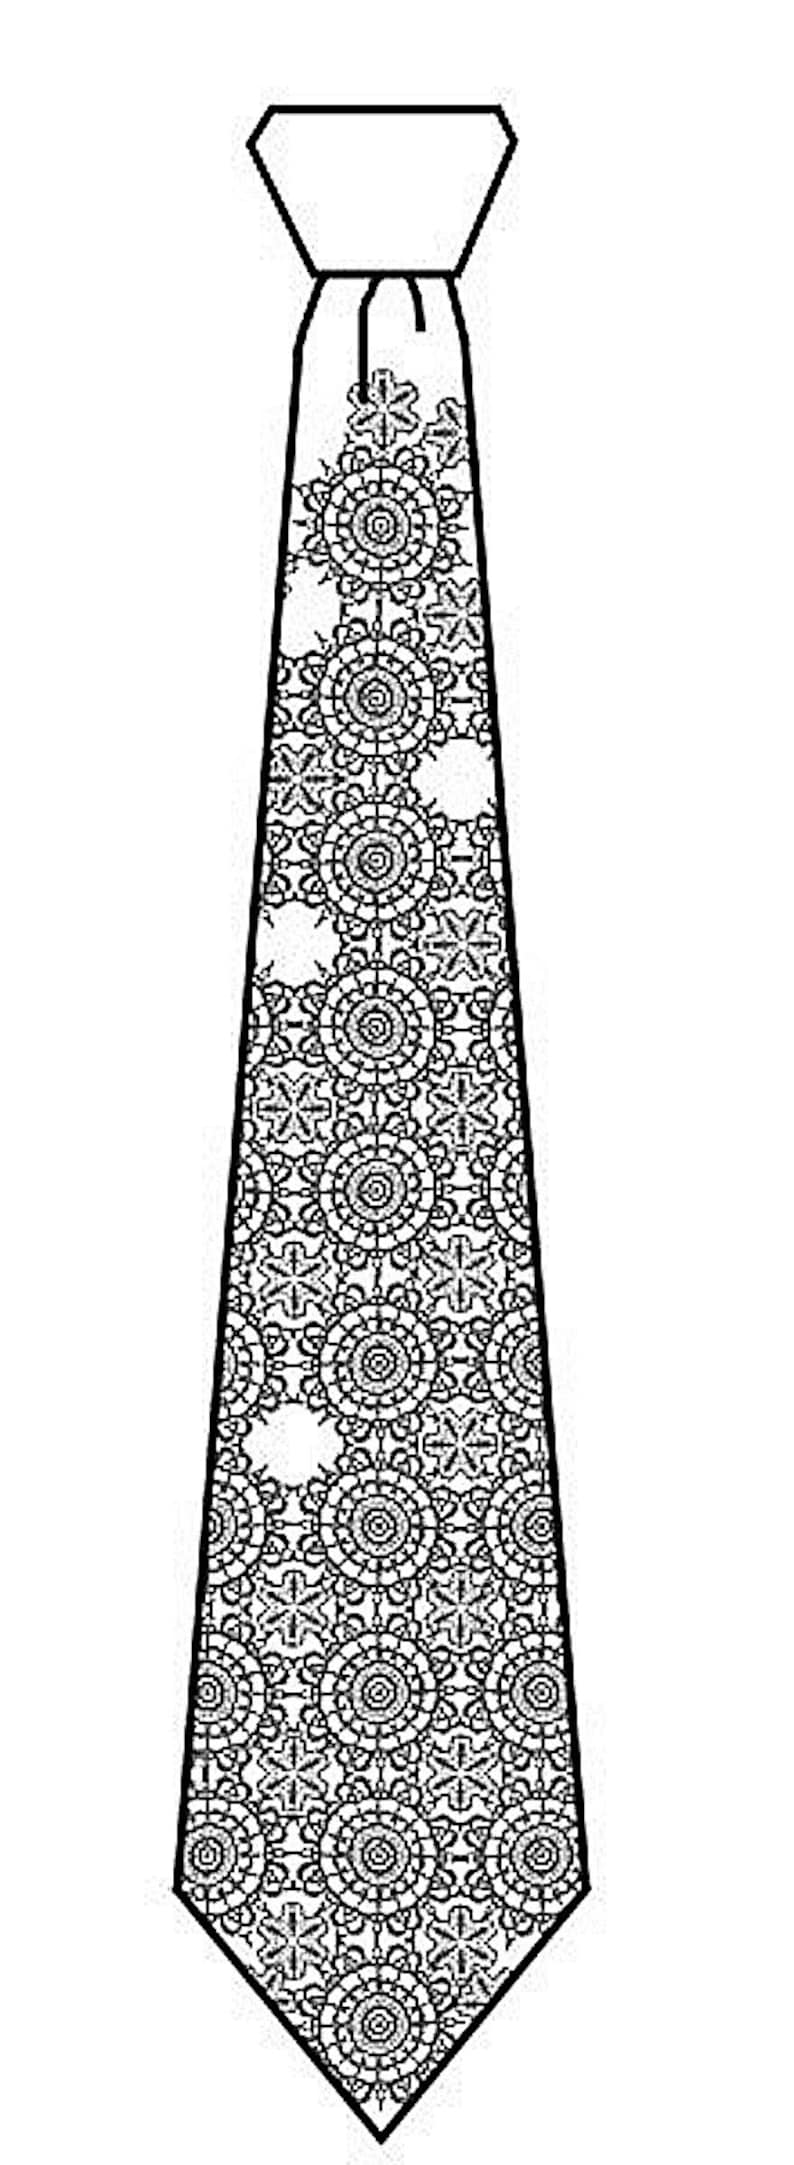 Doily Lace necktie. Men's rustic Cottage Lace tie, warm cream print. Standard, extra long narrow or skinny size. Groom, groomsmen gift. imagen 4